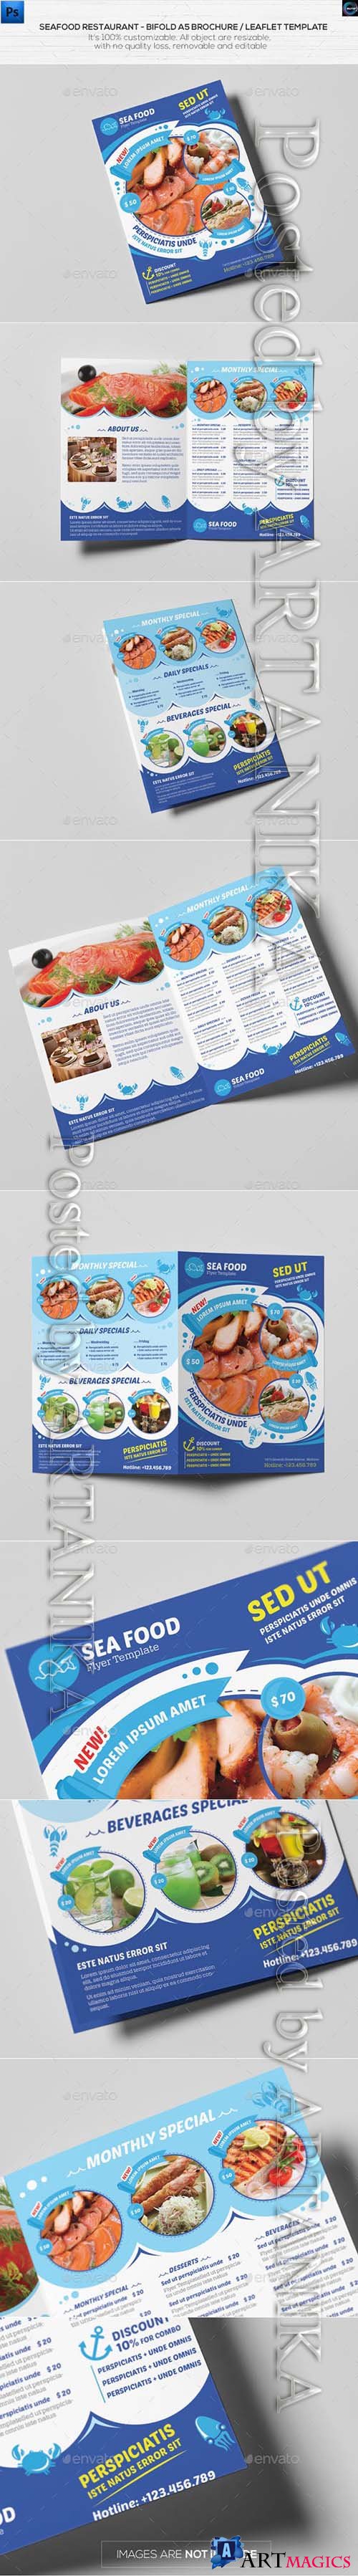 Graphicriver - Seafood Restaurant-A5 Brochure/Leaflet Template 12341412